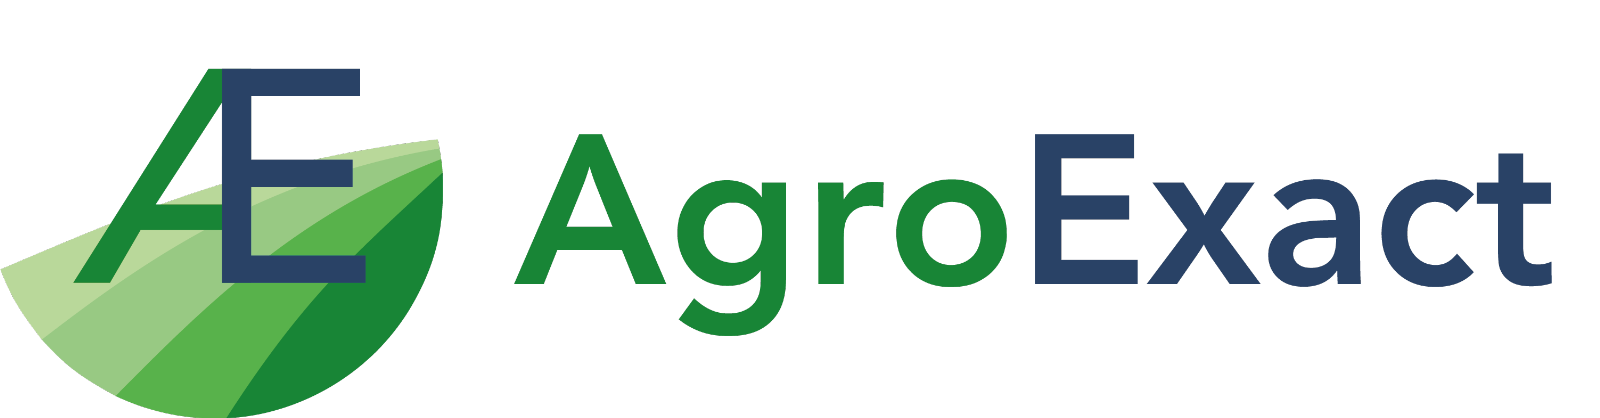 AgroExact logo